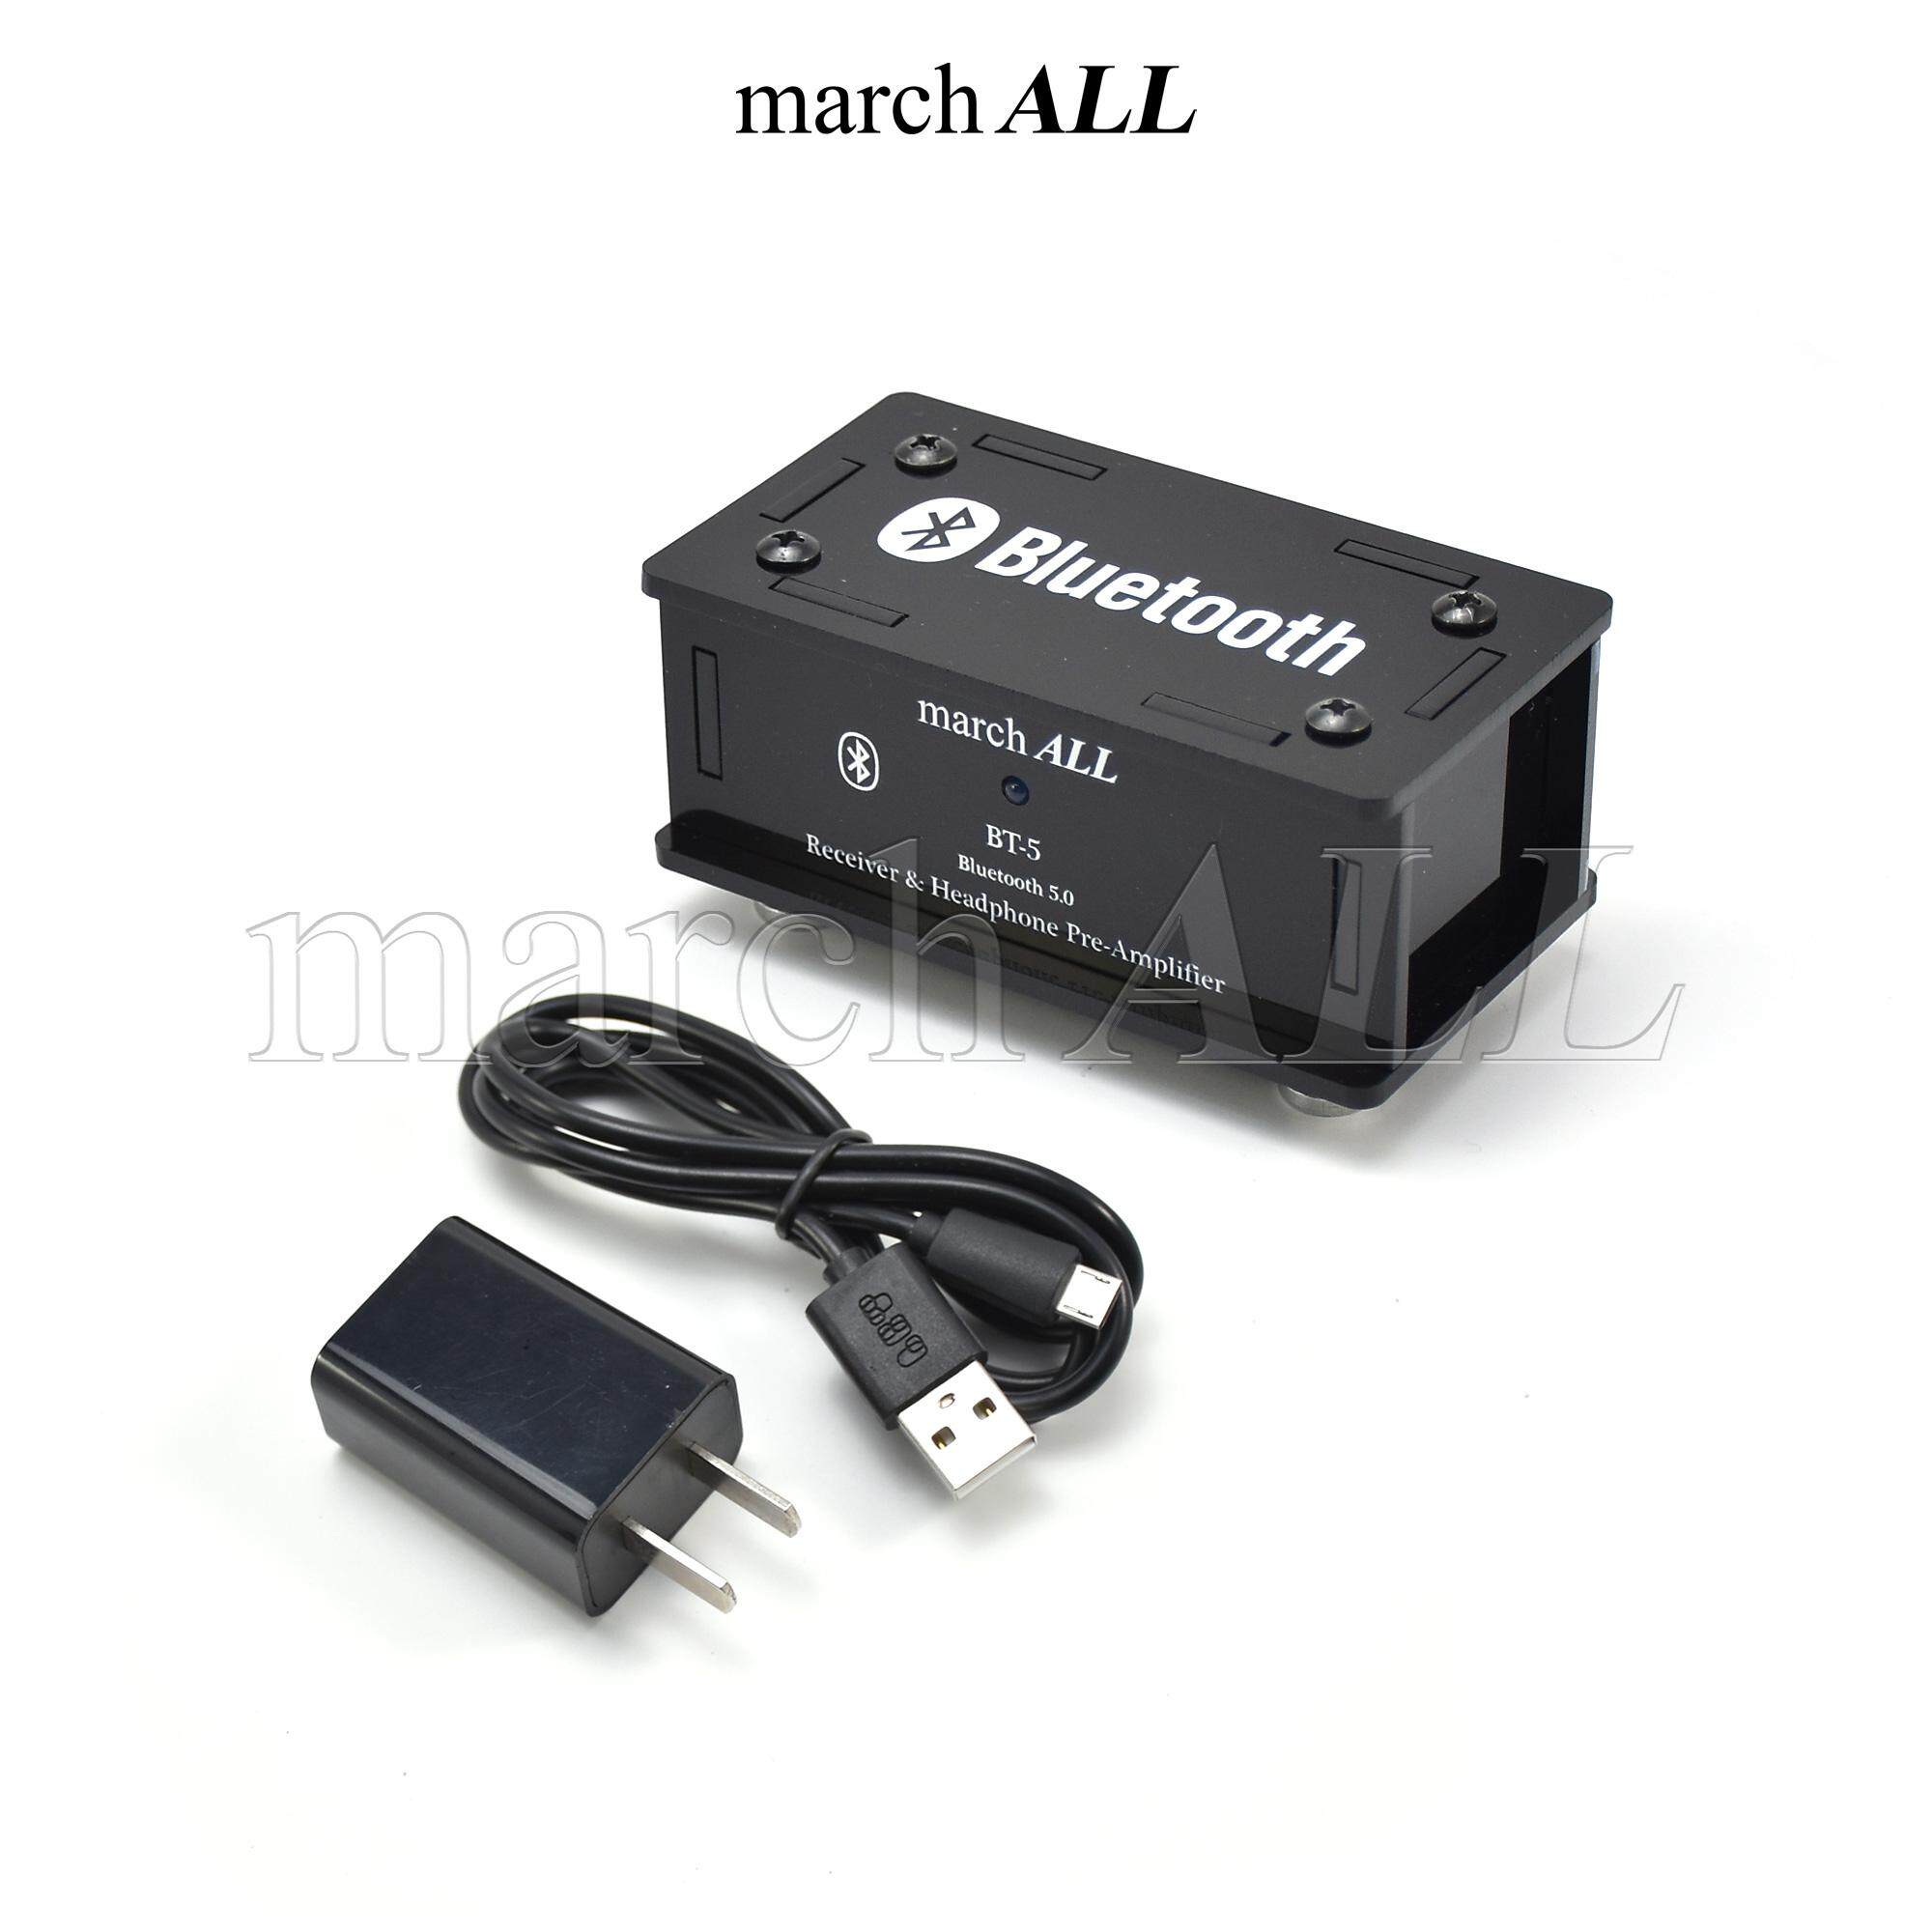 Marchall BT-5 บลูทูธ 5.0 ตัวรับ สัญญาณ บลูทูธ Bluetooth เสียงชัด ทุ้มดีมาก เบสลึก แหลมใส ติดตั้งง่าย เป็น ใช้เป็น ปรีแอมป์ และ แอมป์ หูฟัง ได้ Headphone Receiver Pre-Amplifier ฟรีอะแดปเตอร์ ใช้งานได้เลย ในบ้าน บนรถ ครบ